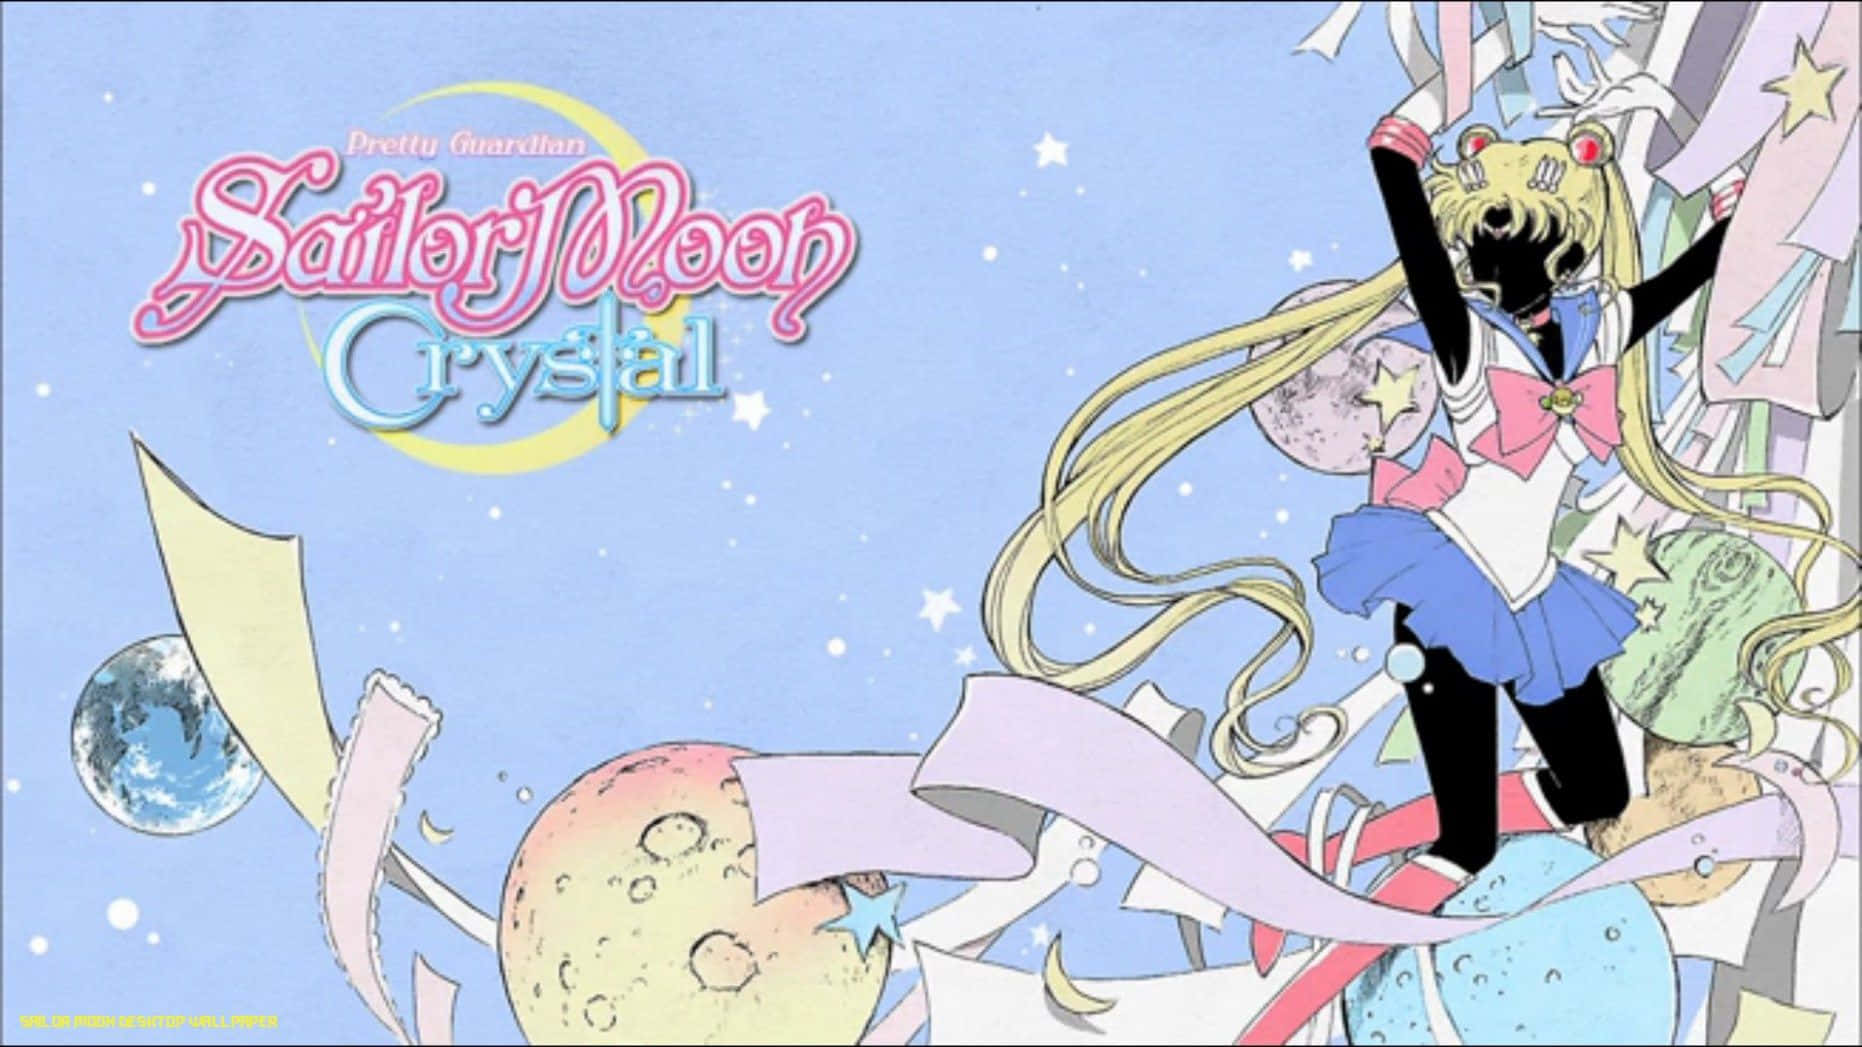 Pastellsailor Moon Crystal Anime 2014 Wallpaper